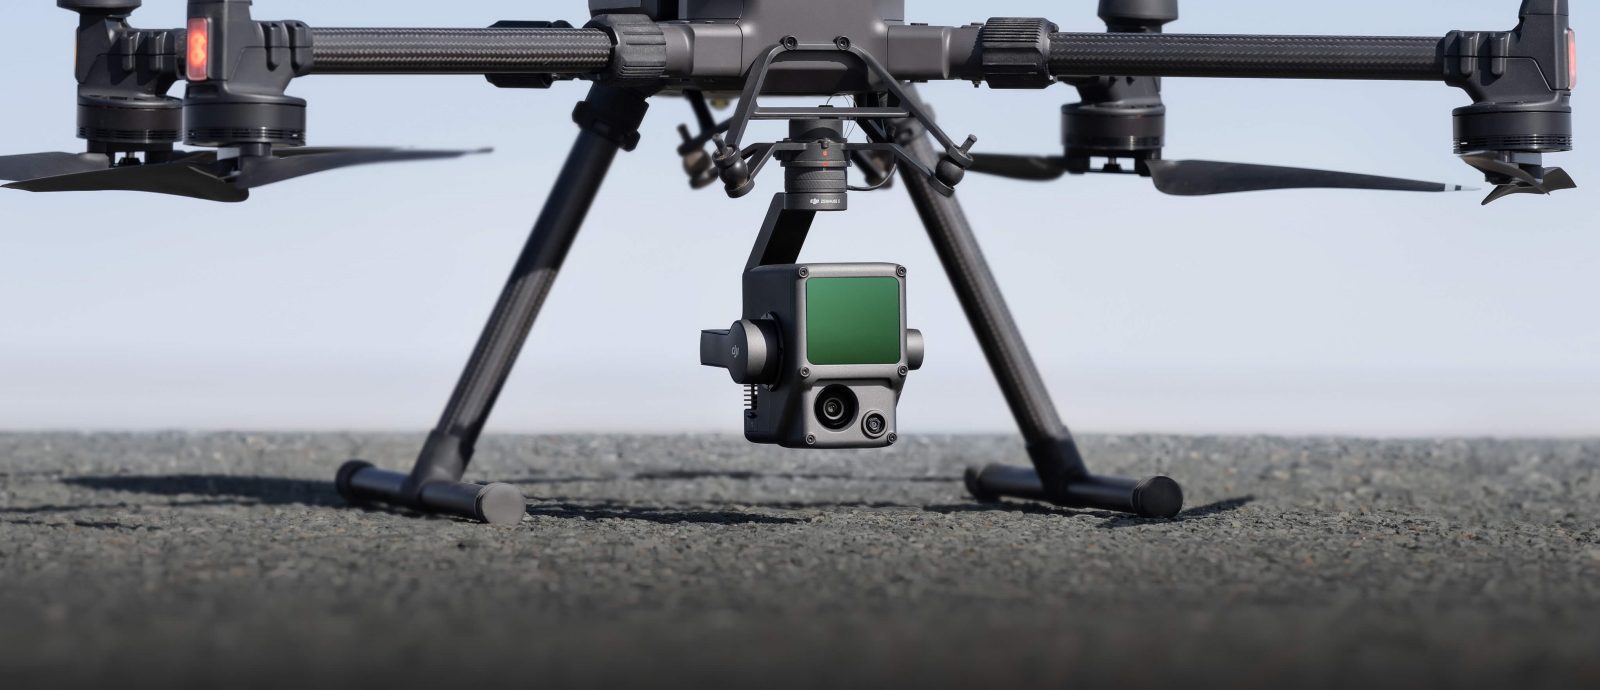 dji m300 rtk drone zenmuse l1 firmware update